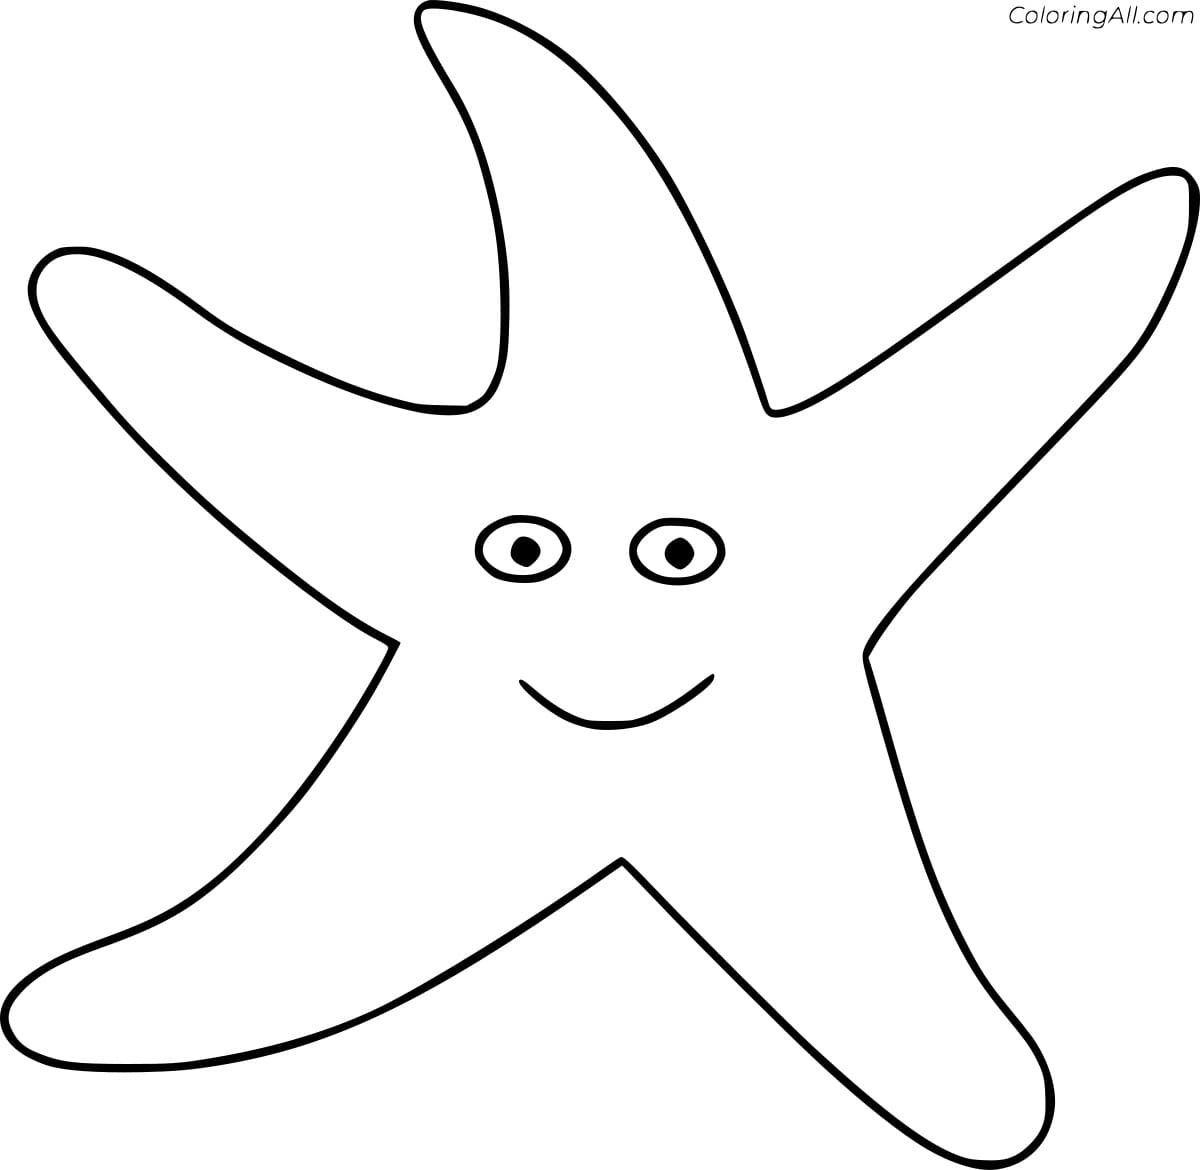 Simple Cartoon Starfish Image